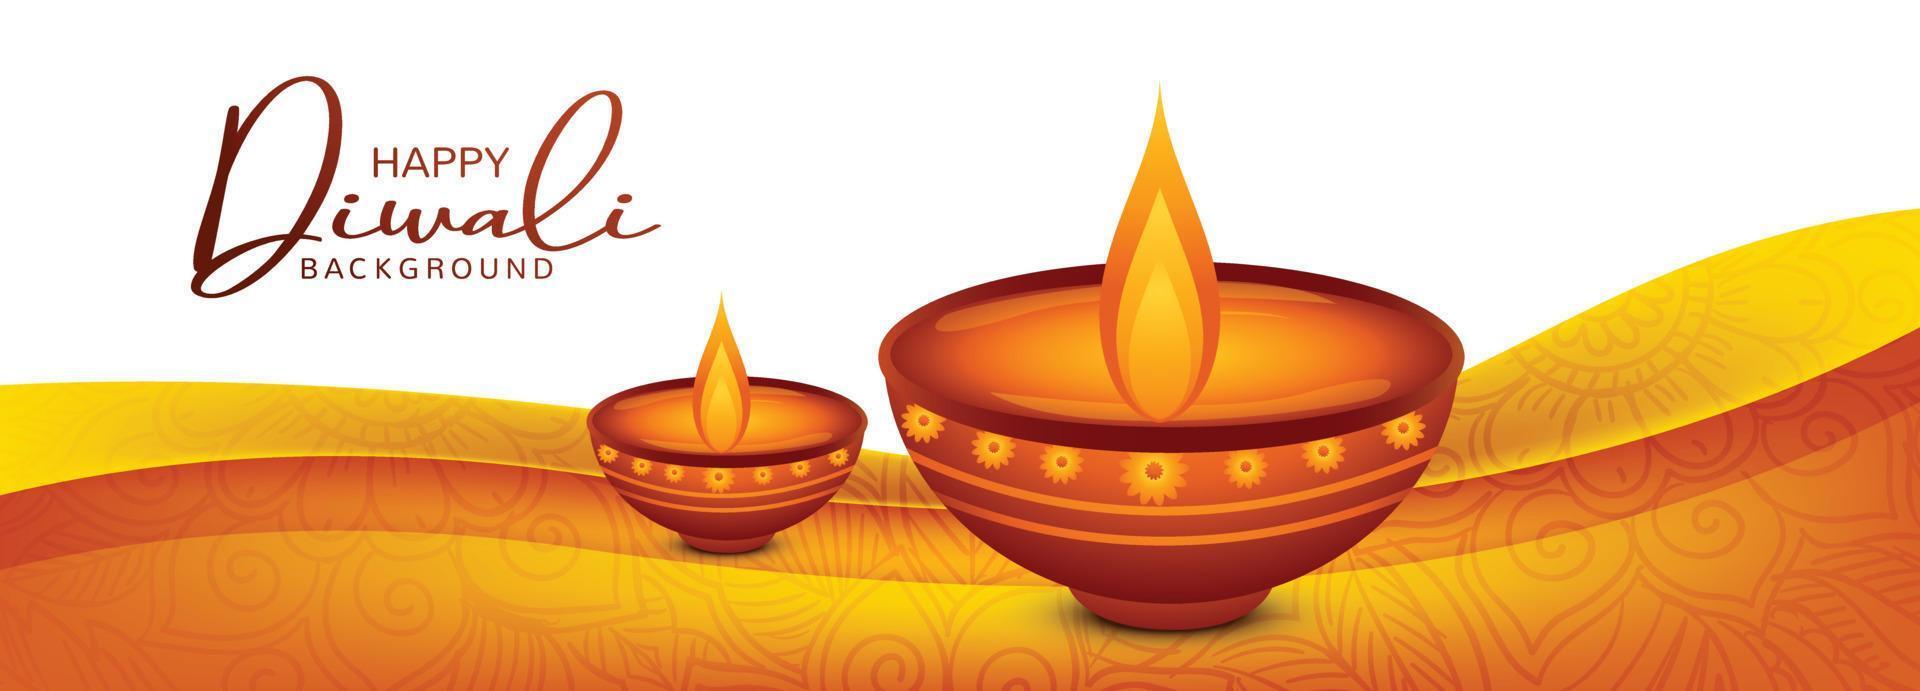 Happy diwali indian festival celebration greeting card banner background vector